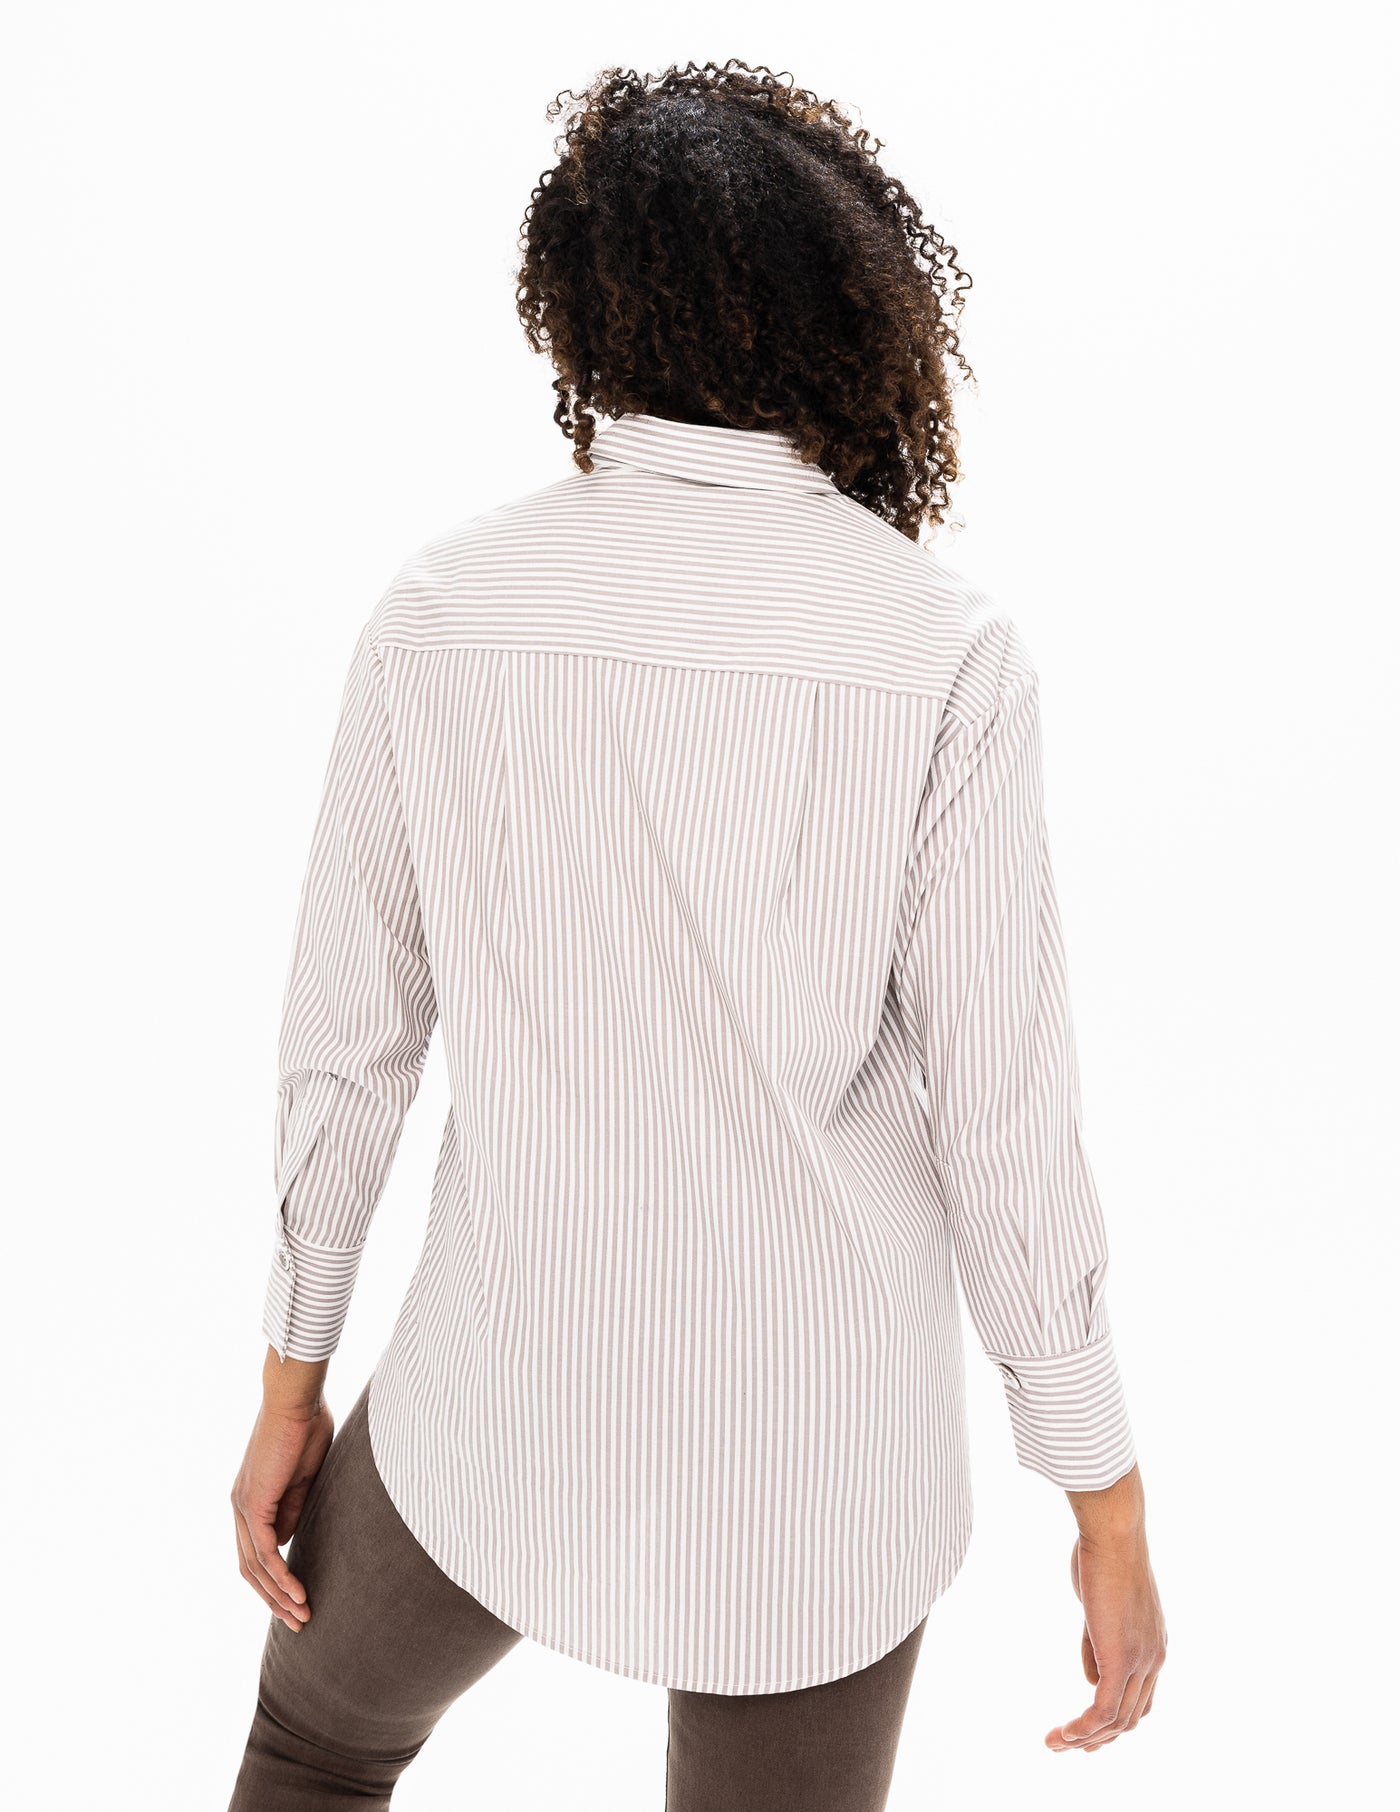 Long Sleeve Blouse/Shirt (Heather Brown Sugar Combo)